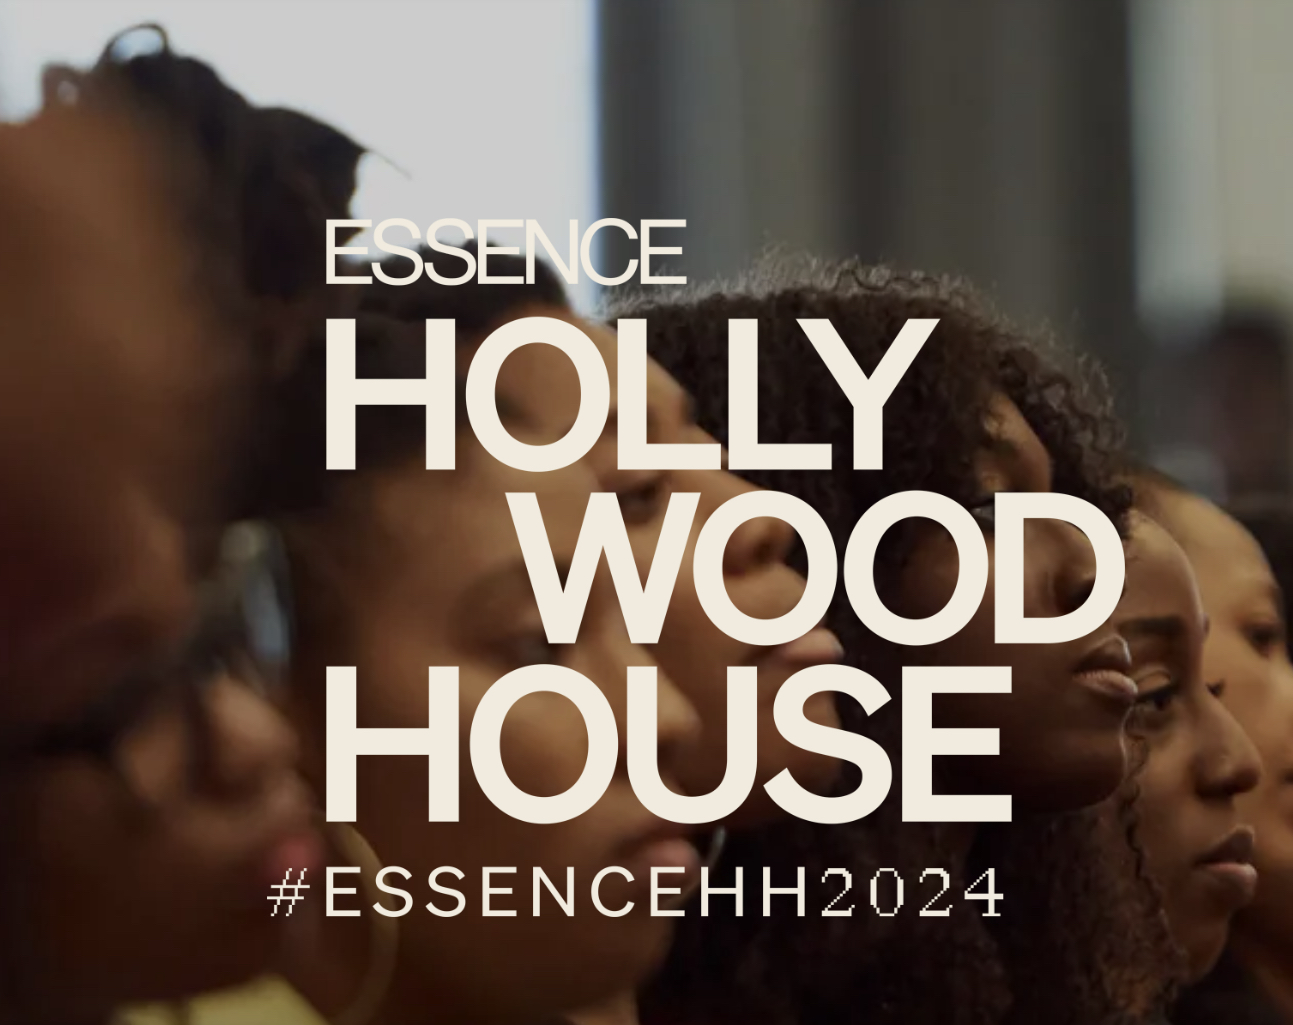 ESSENCE Hollywood House